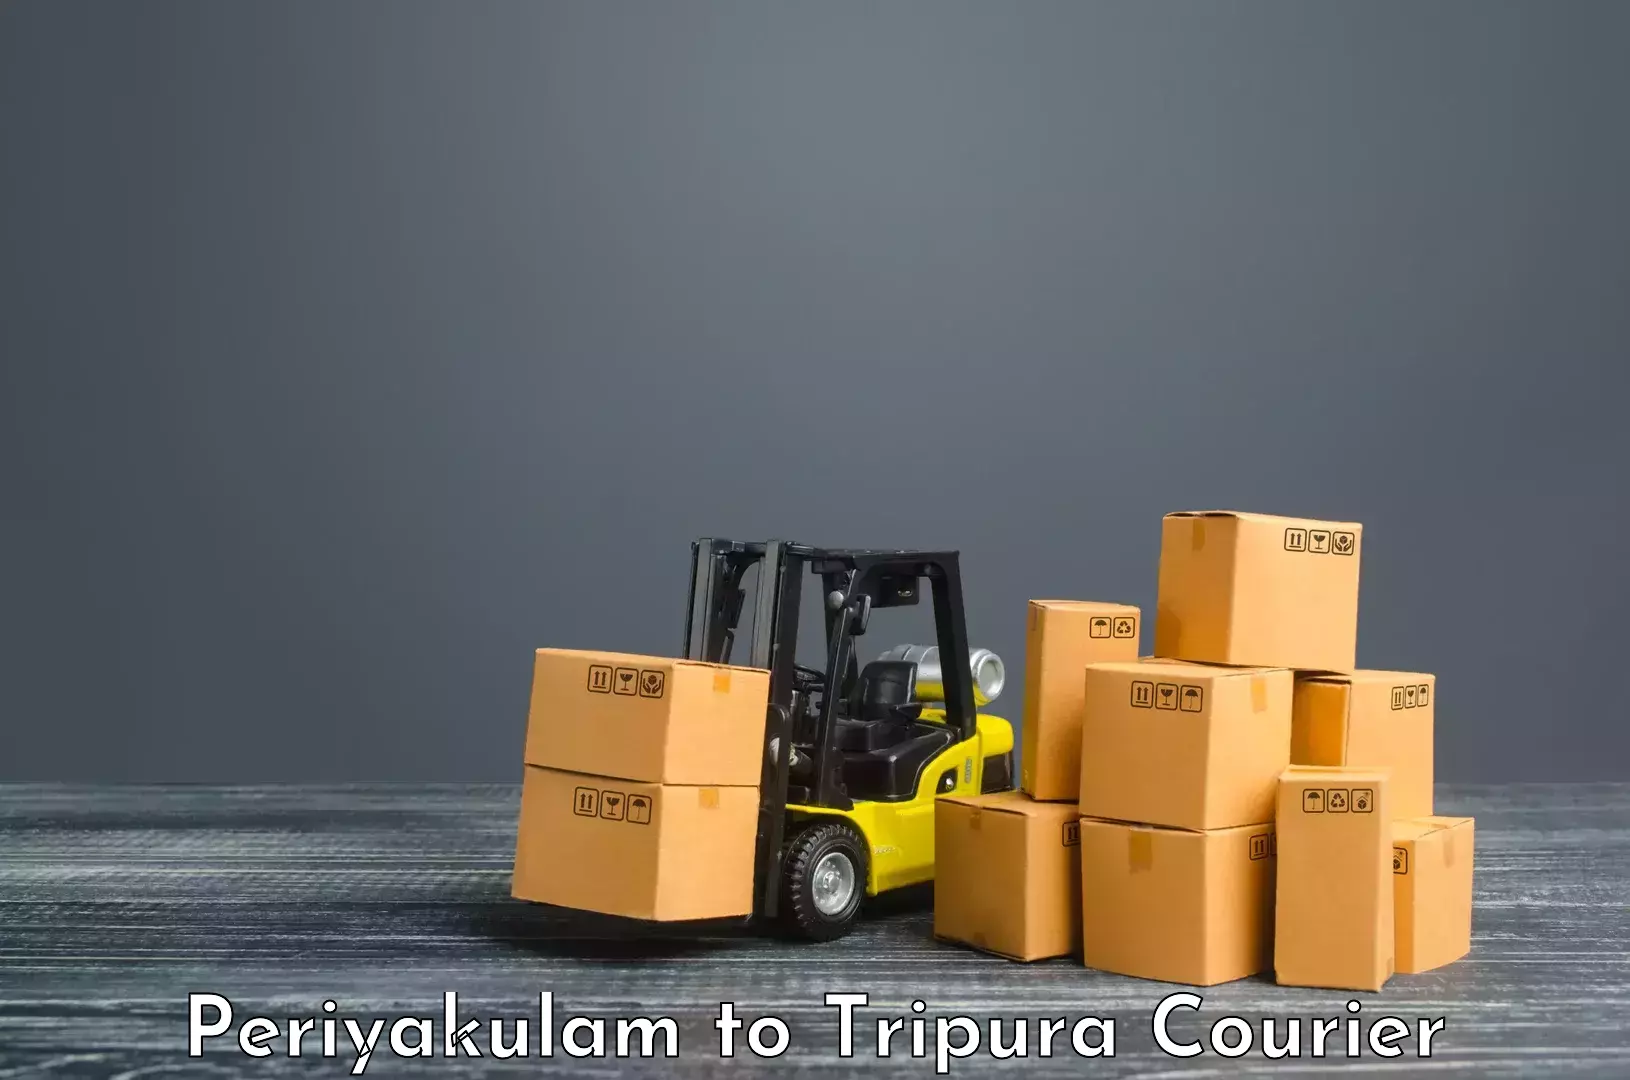 Delivery service partnership Periyakulam to Tripura